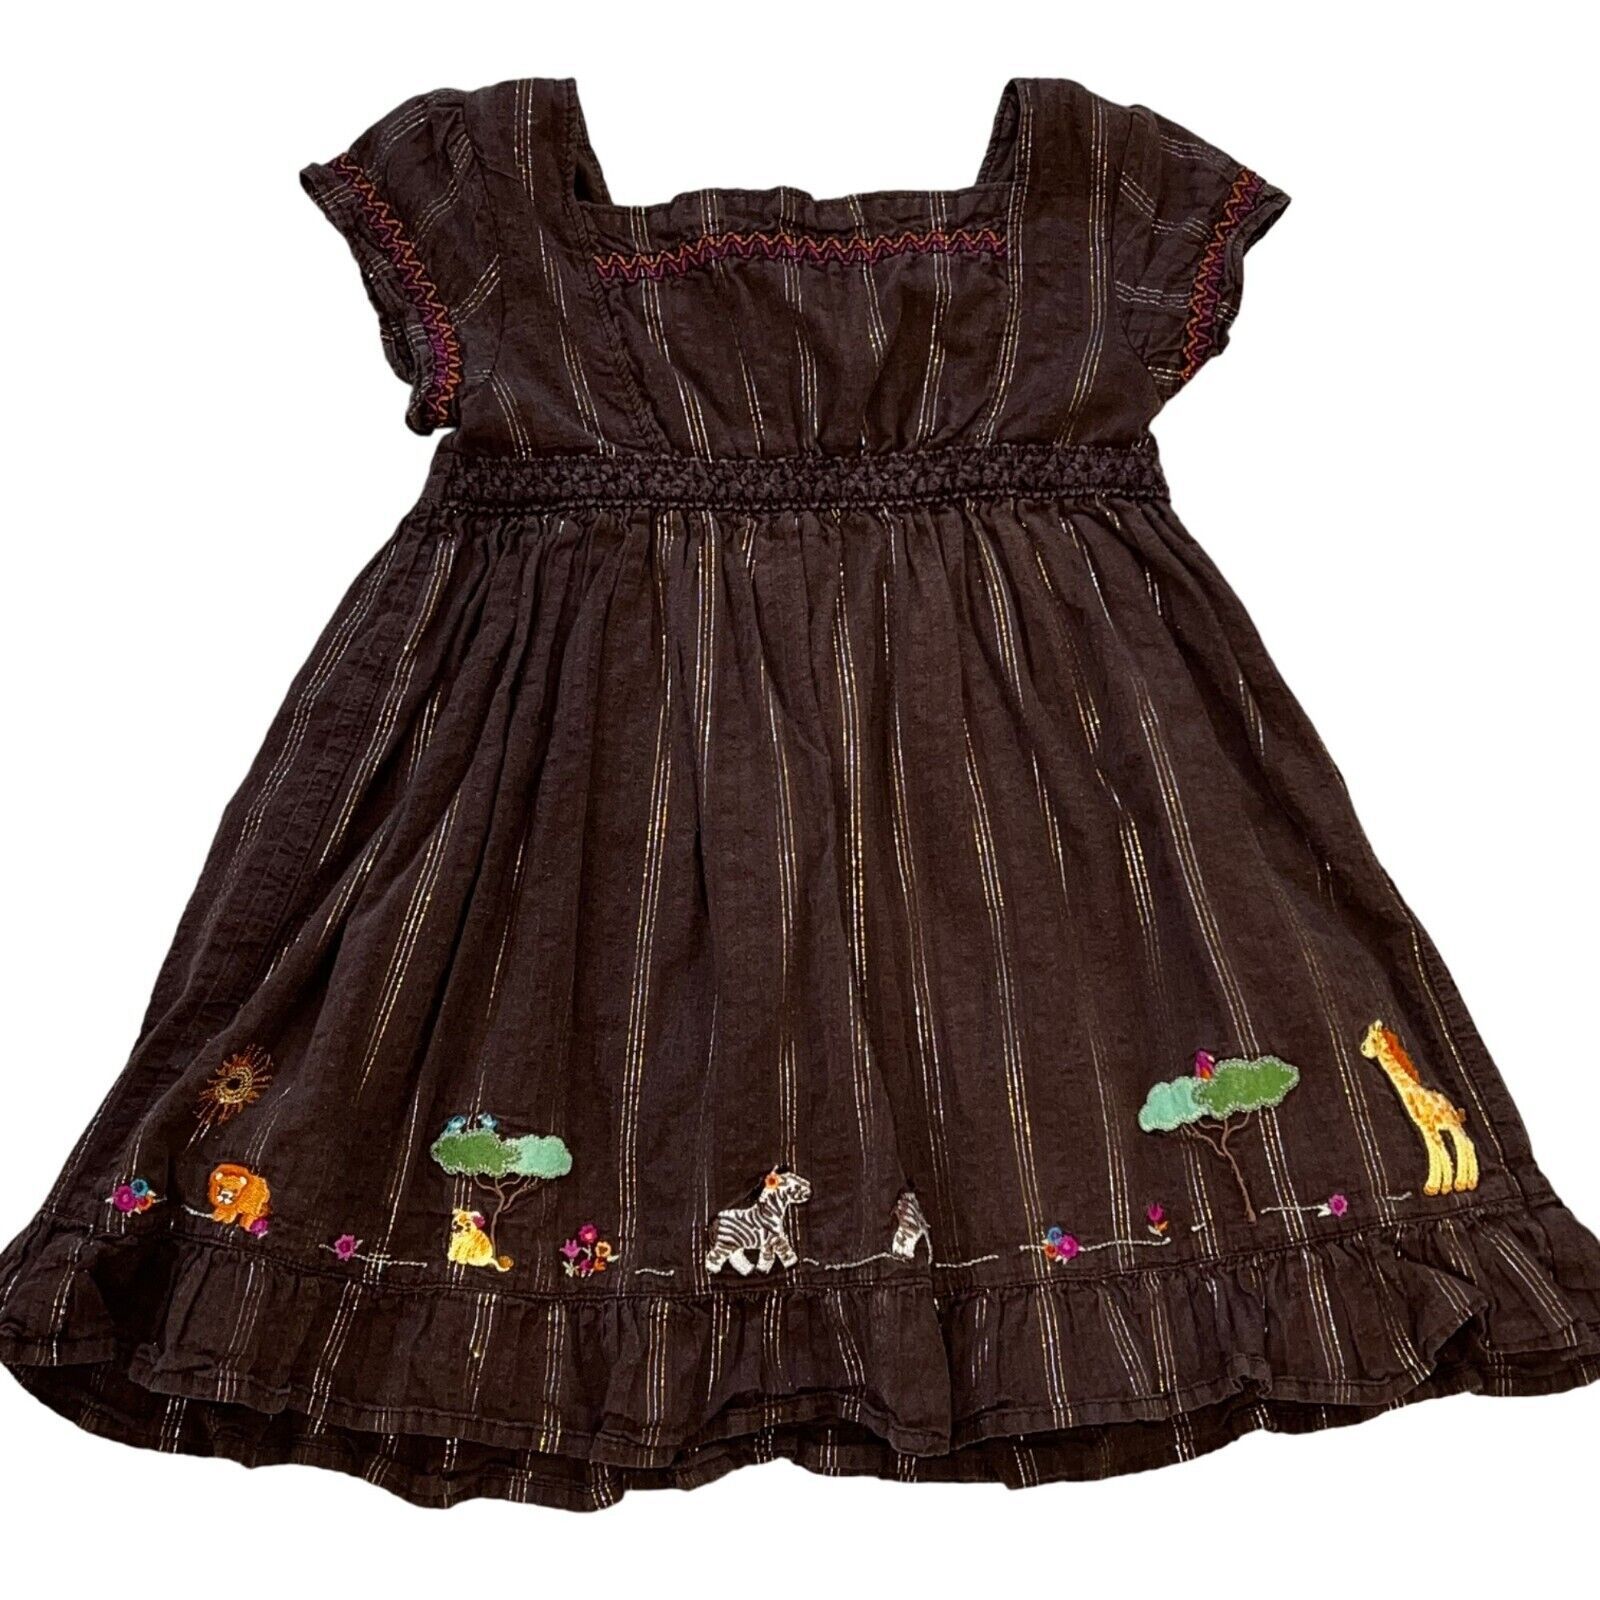 Gymboree Safari Theme Brown Applique Dress 2T Vintage - $17.28